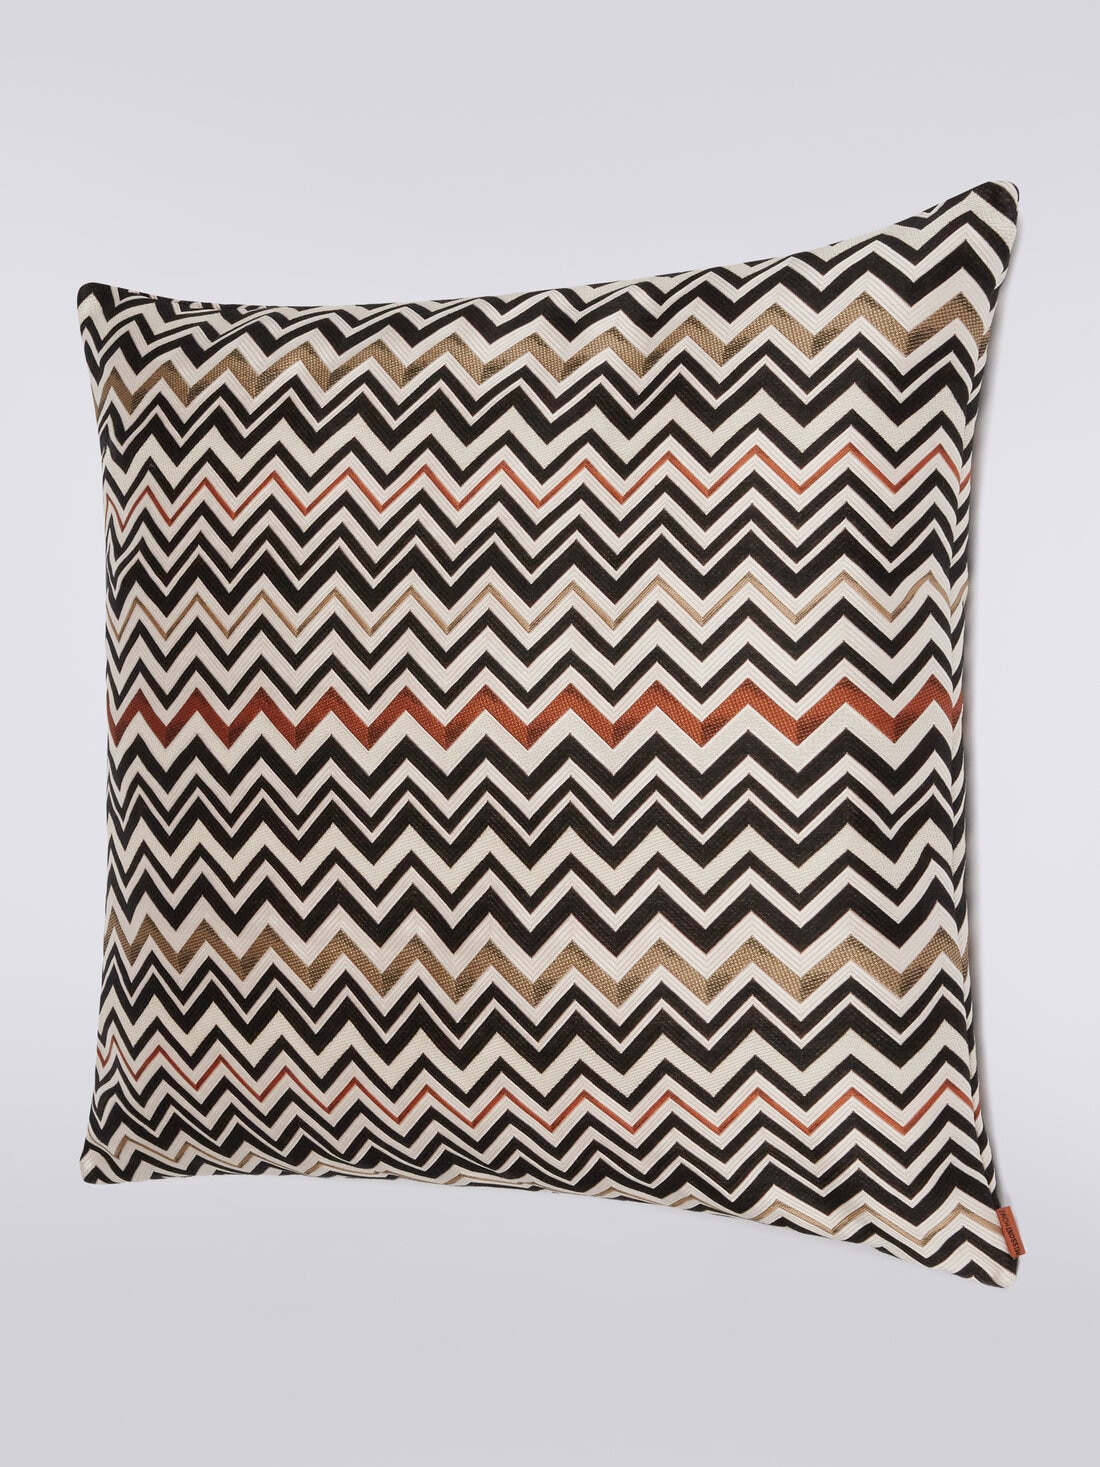 Belfast cushion 60x60 cm, Multicoloured  - 8051275581475 - 1